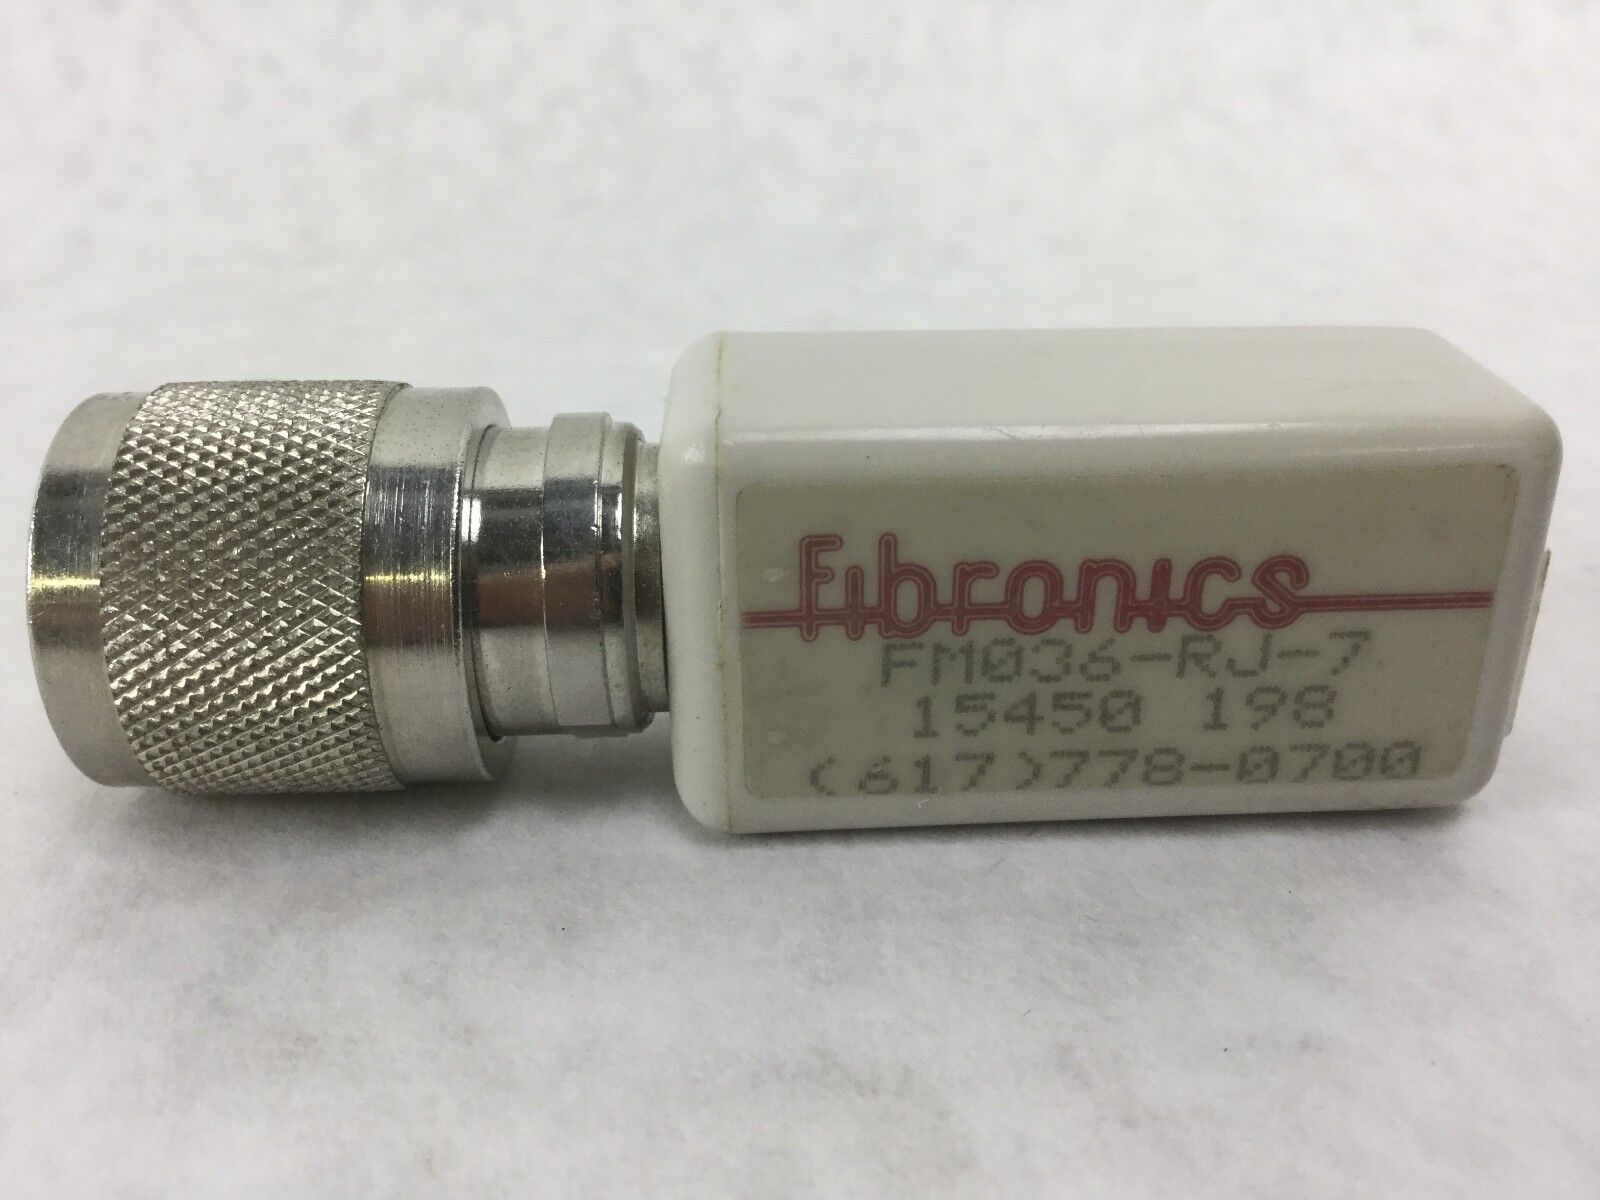 Fibronics Network Adapter FM036-RJ-7 15450 198